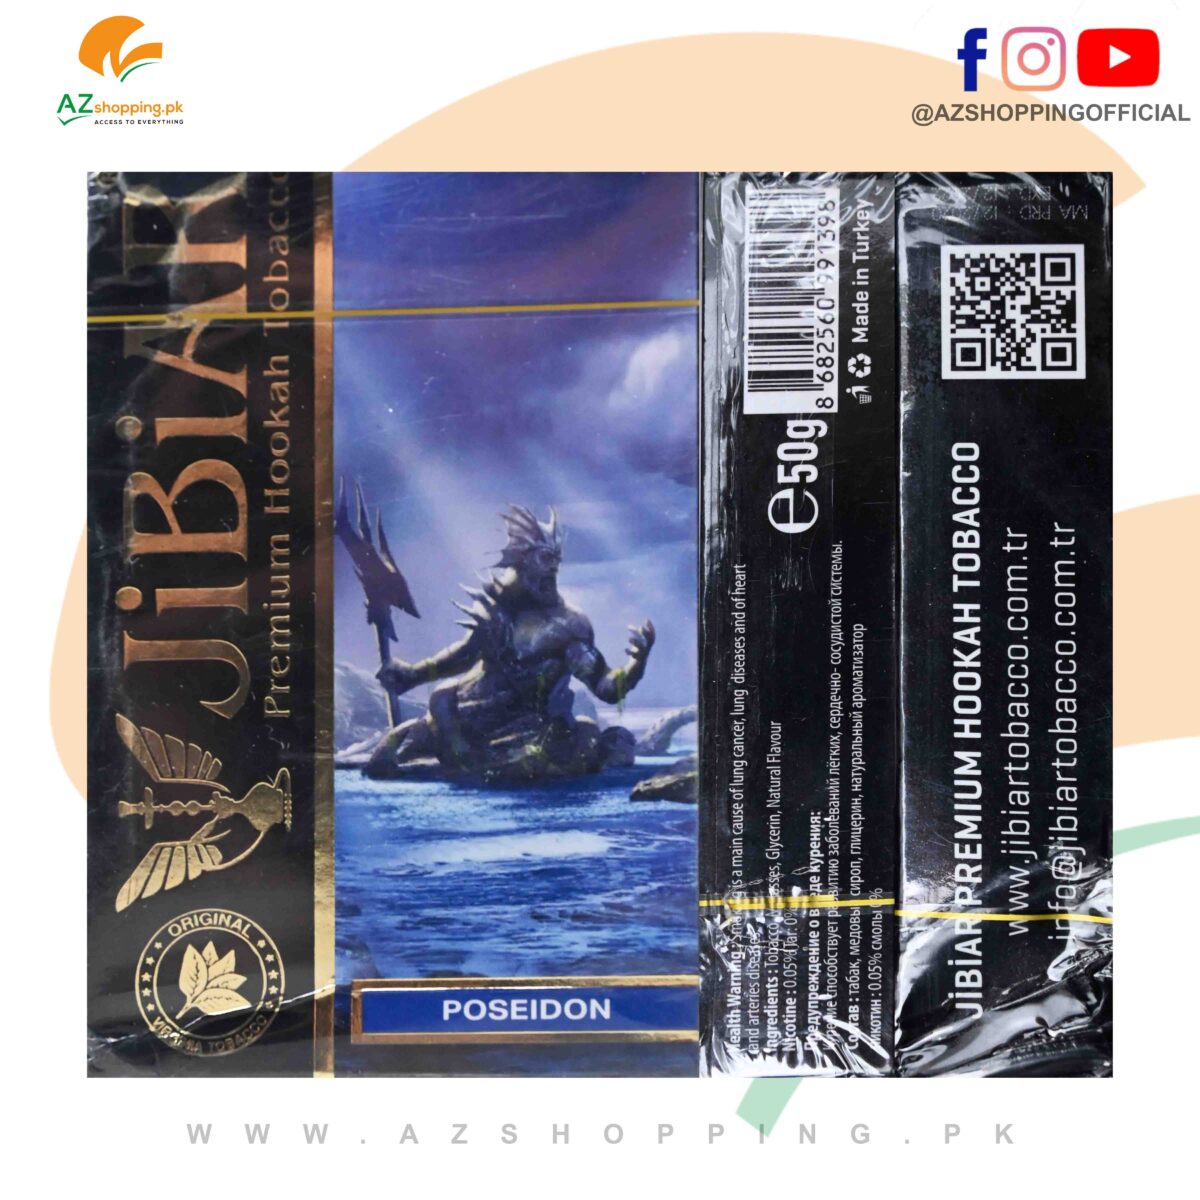 Jibiar Tobacco – Premium Hookah Tobacco Shisha Poseidon Flavor – 50 gram